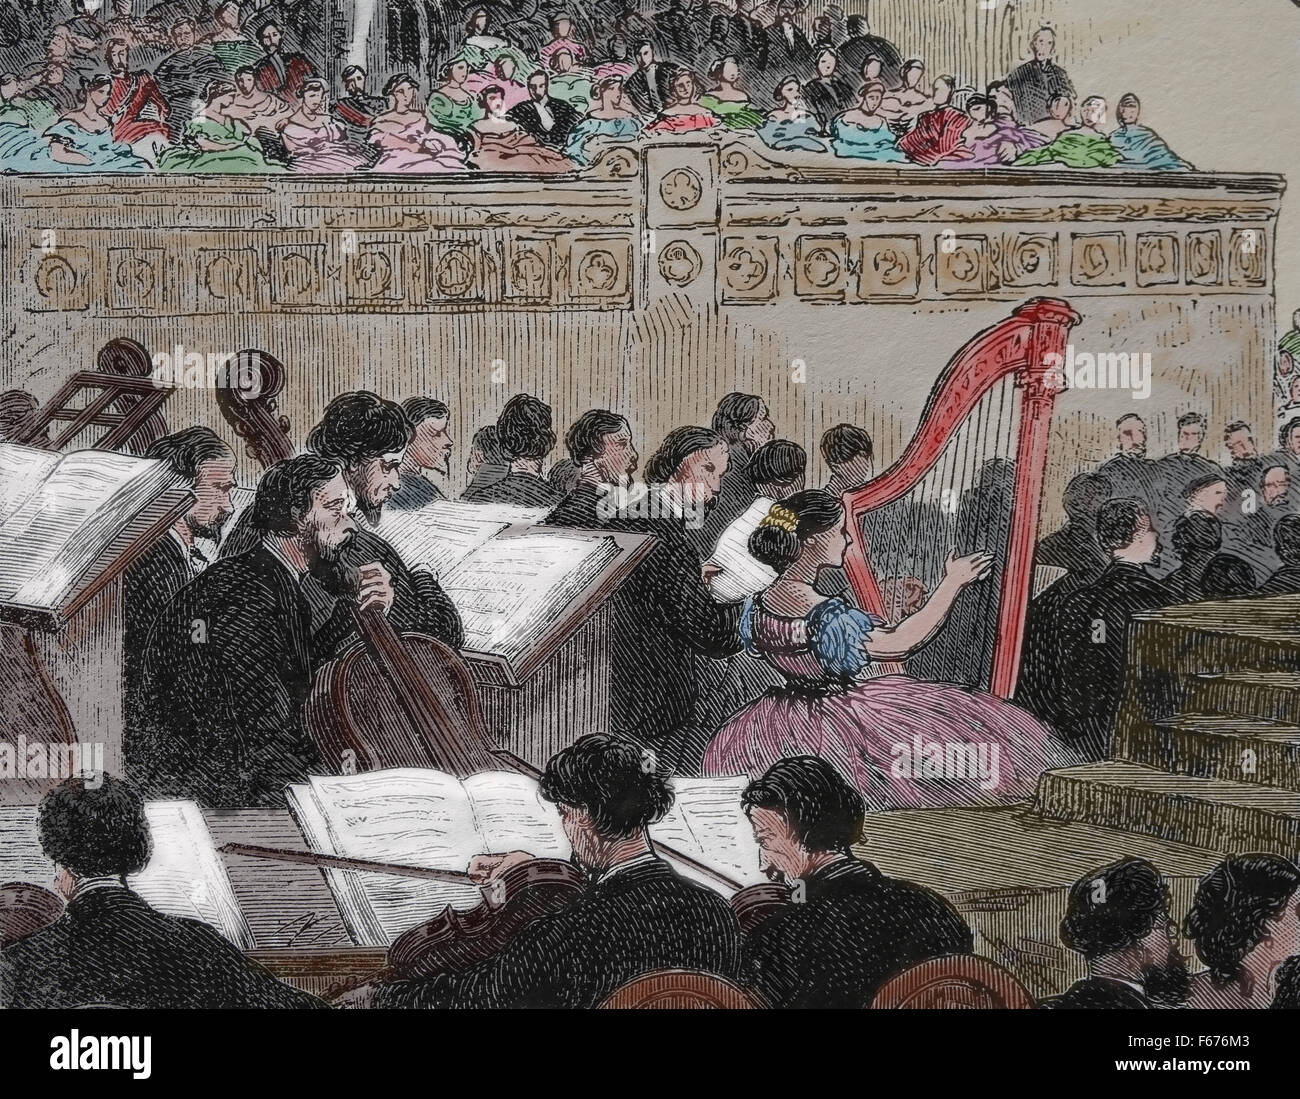 Europa. Ungarn. Orchesta. Gravur. des 19. Jahrhunderts. Farbe. Stockfoto